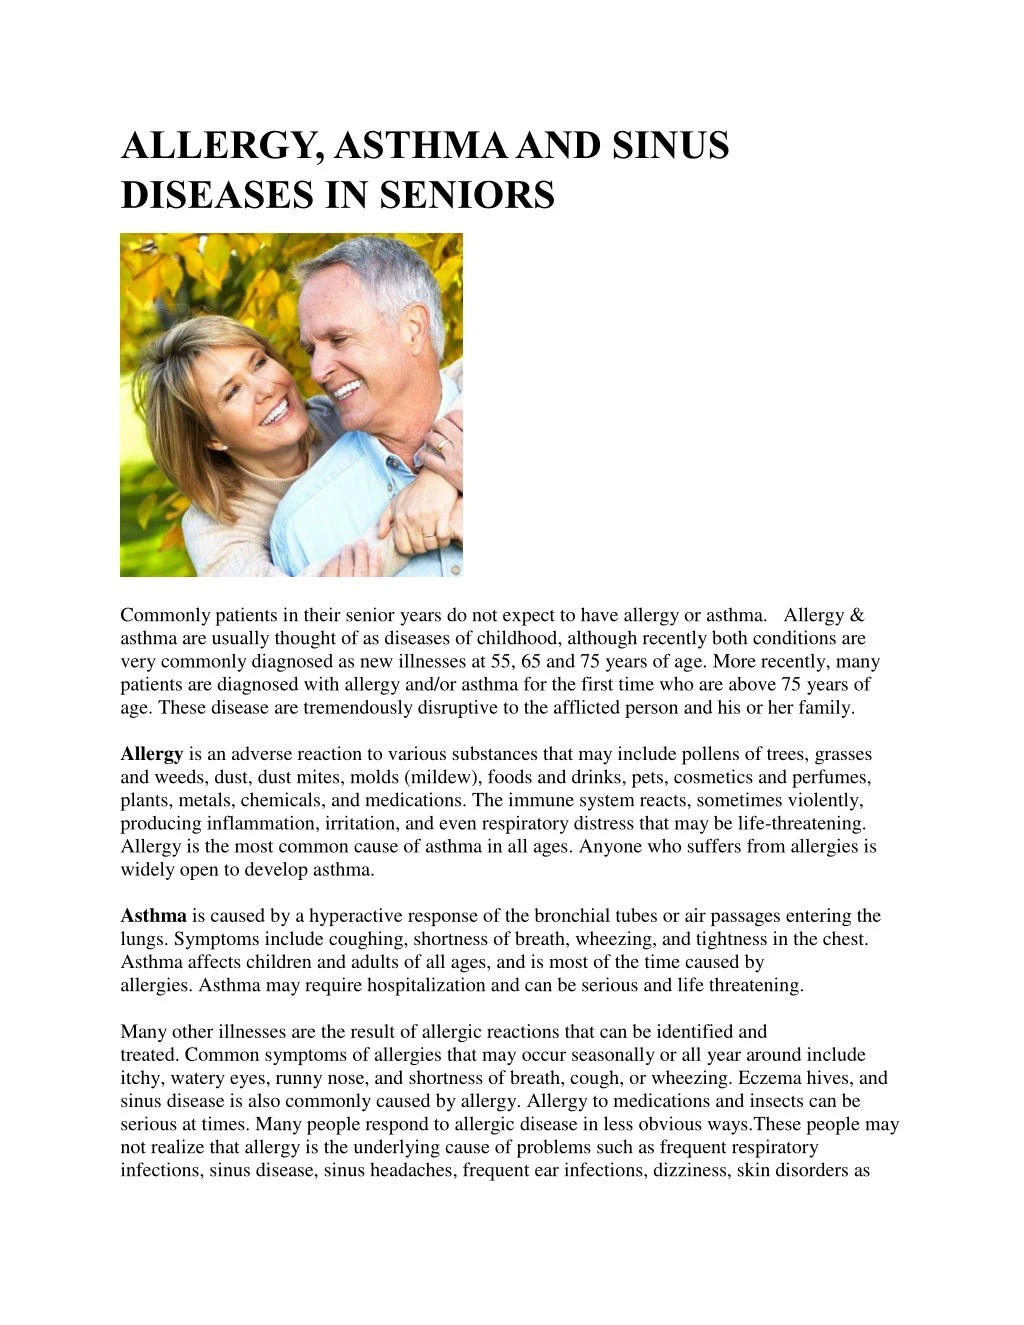 allergy asthma and sinus diseases in seniors